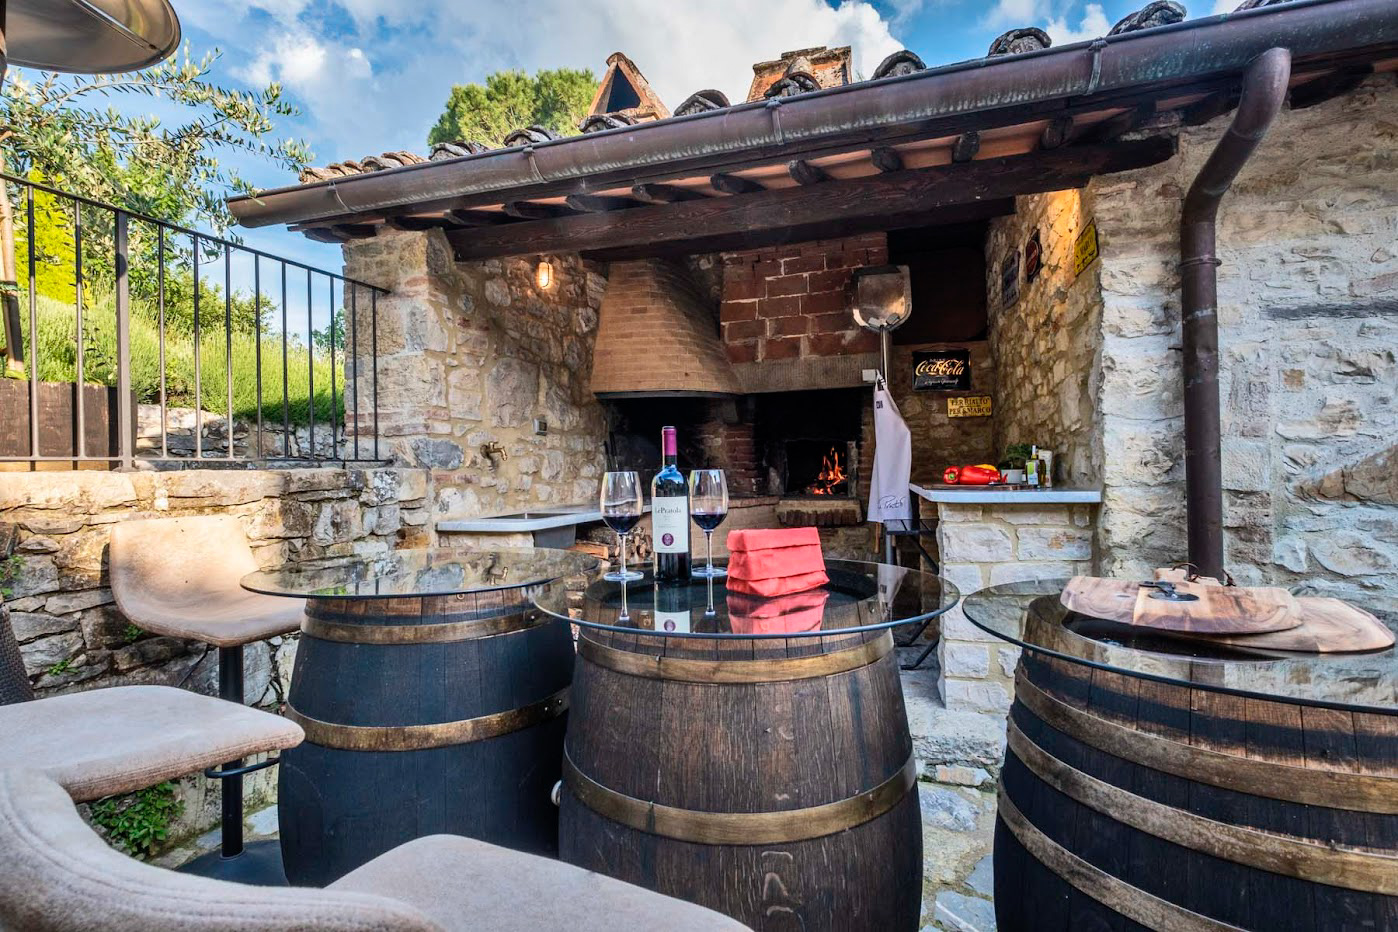 Chianti Country Estate Ferienhaus Toskana Mieten 14 Personen Weinprobe Am Pizzaofen